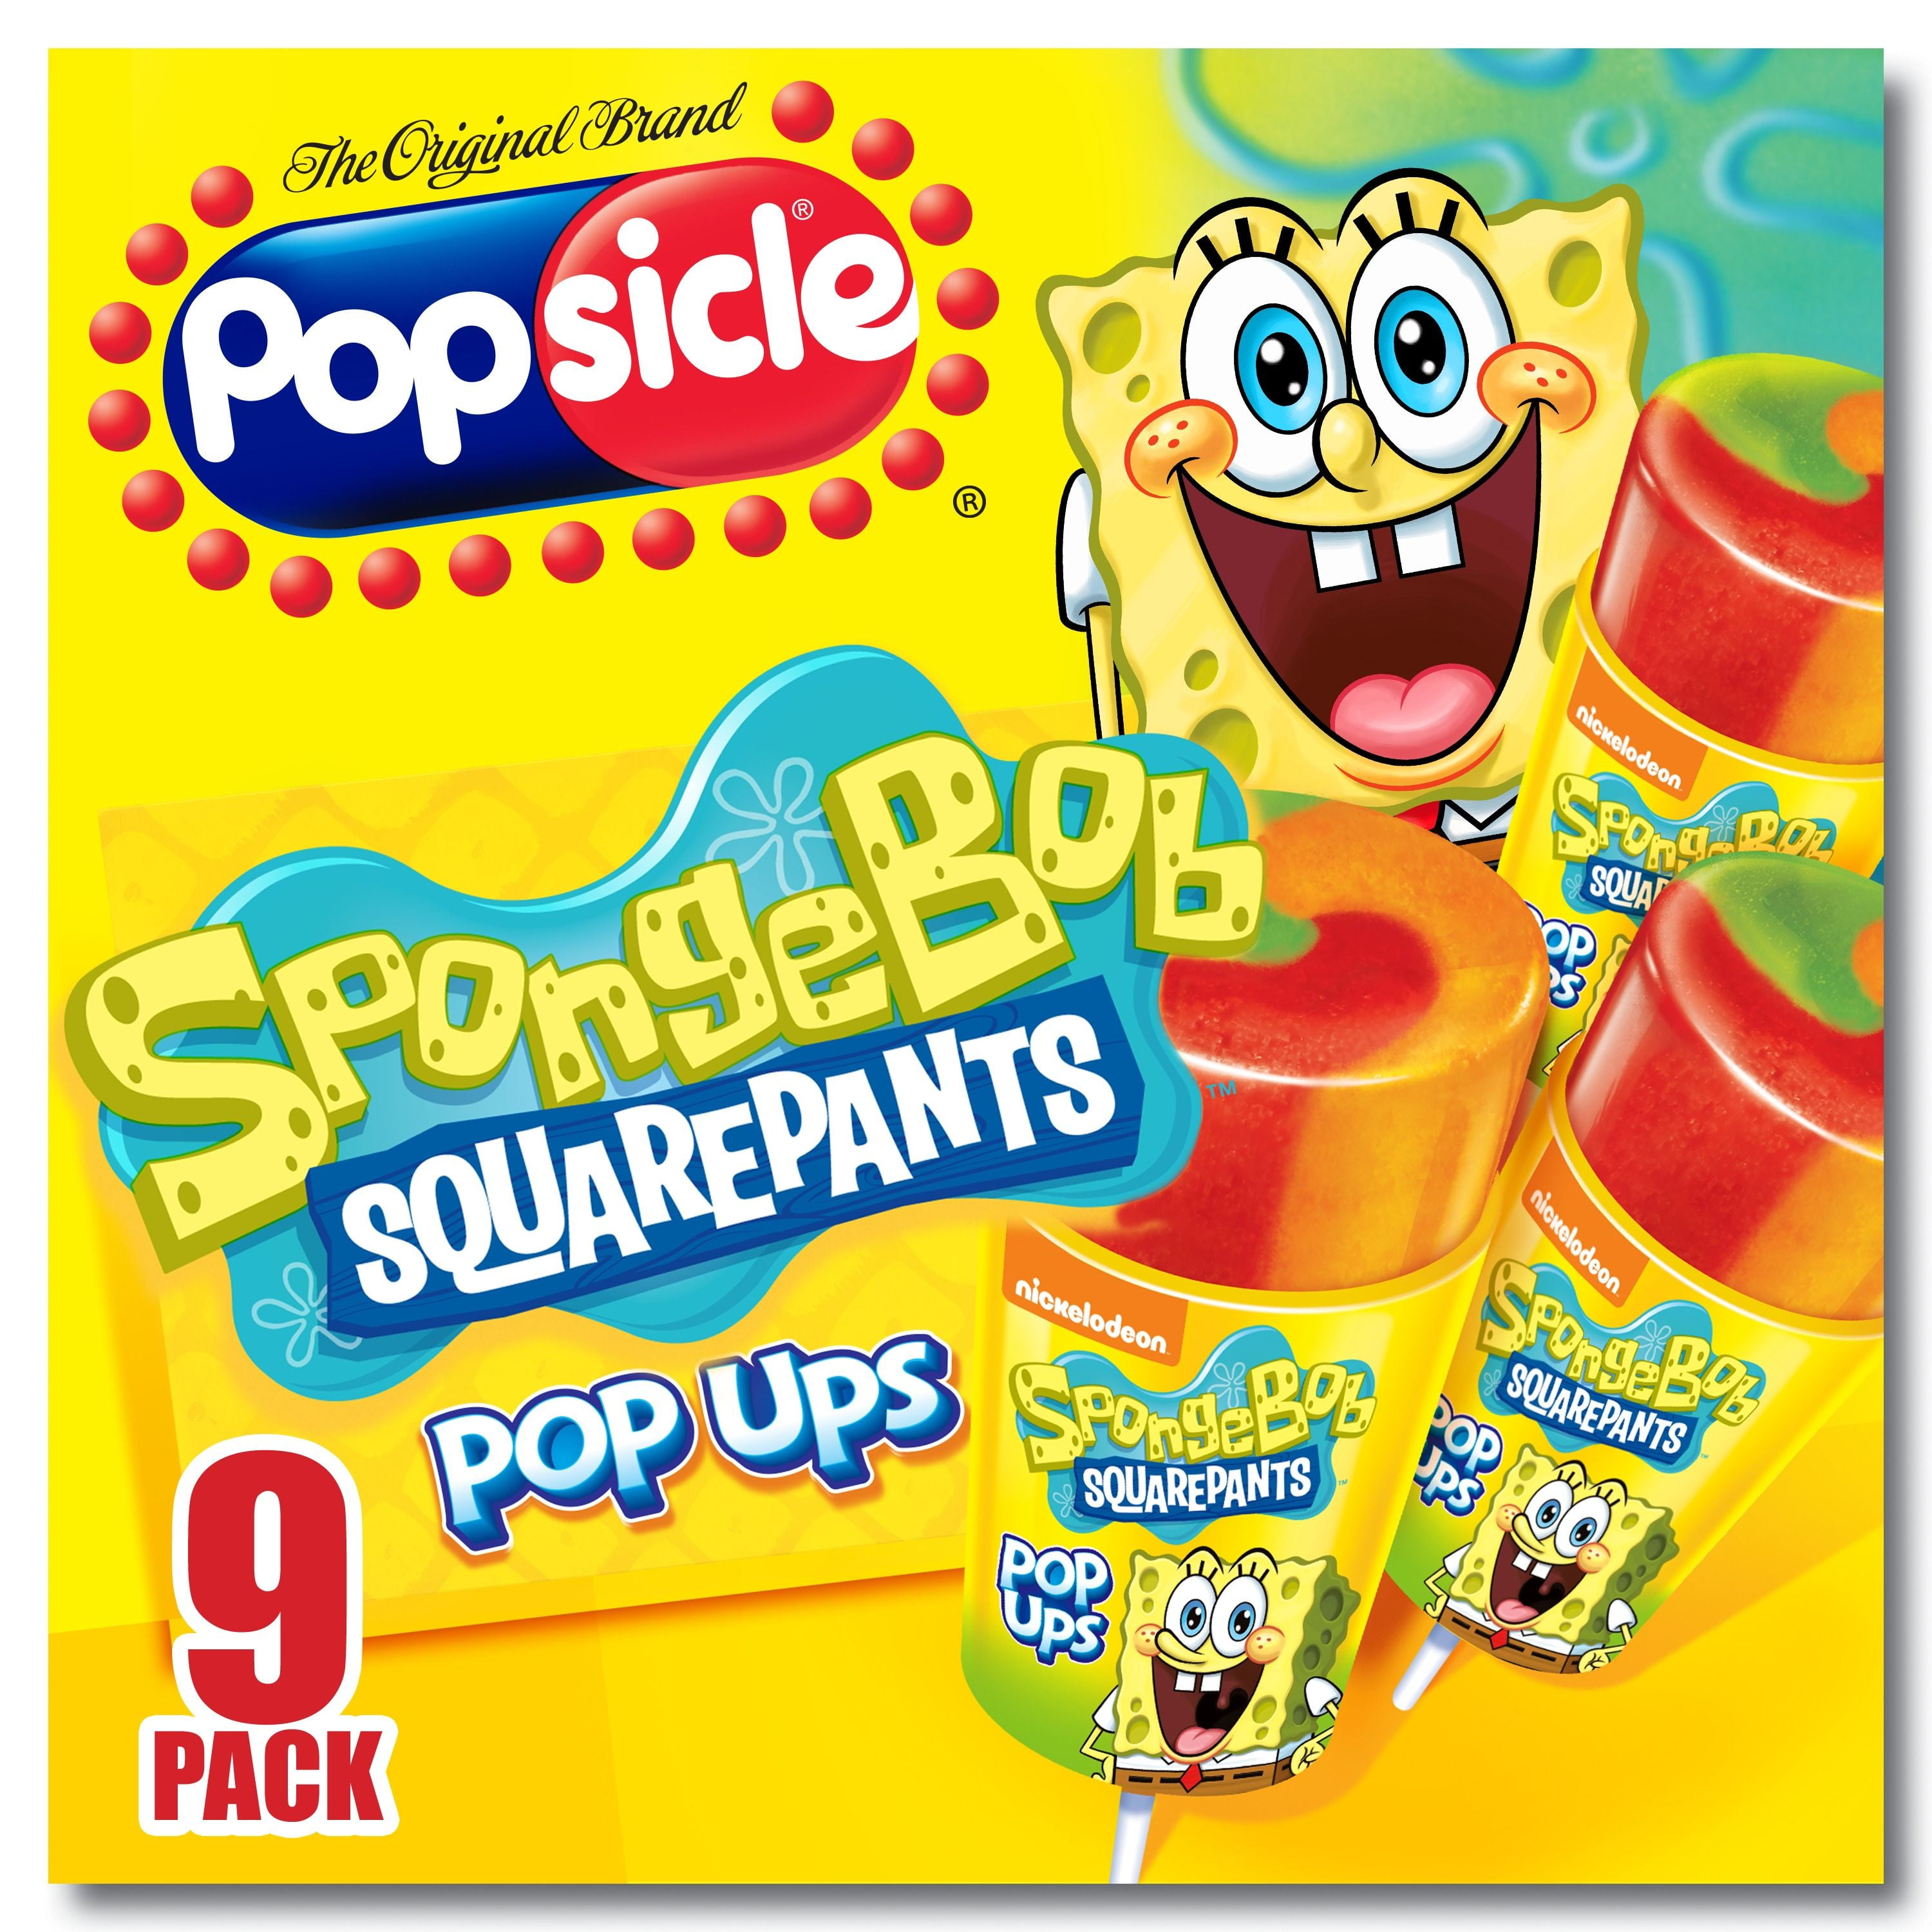 Popsicle Pop Ups SpongeBob SquarePants 2.75 fl oz Each, 9 Pack